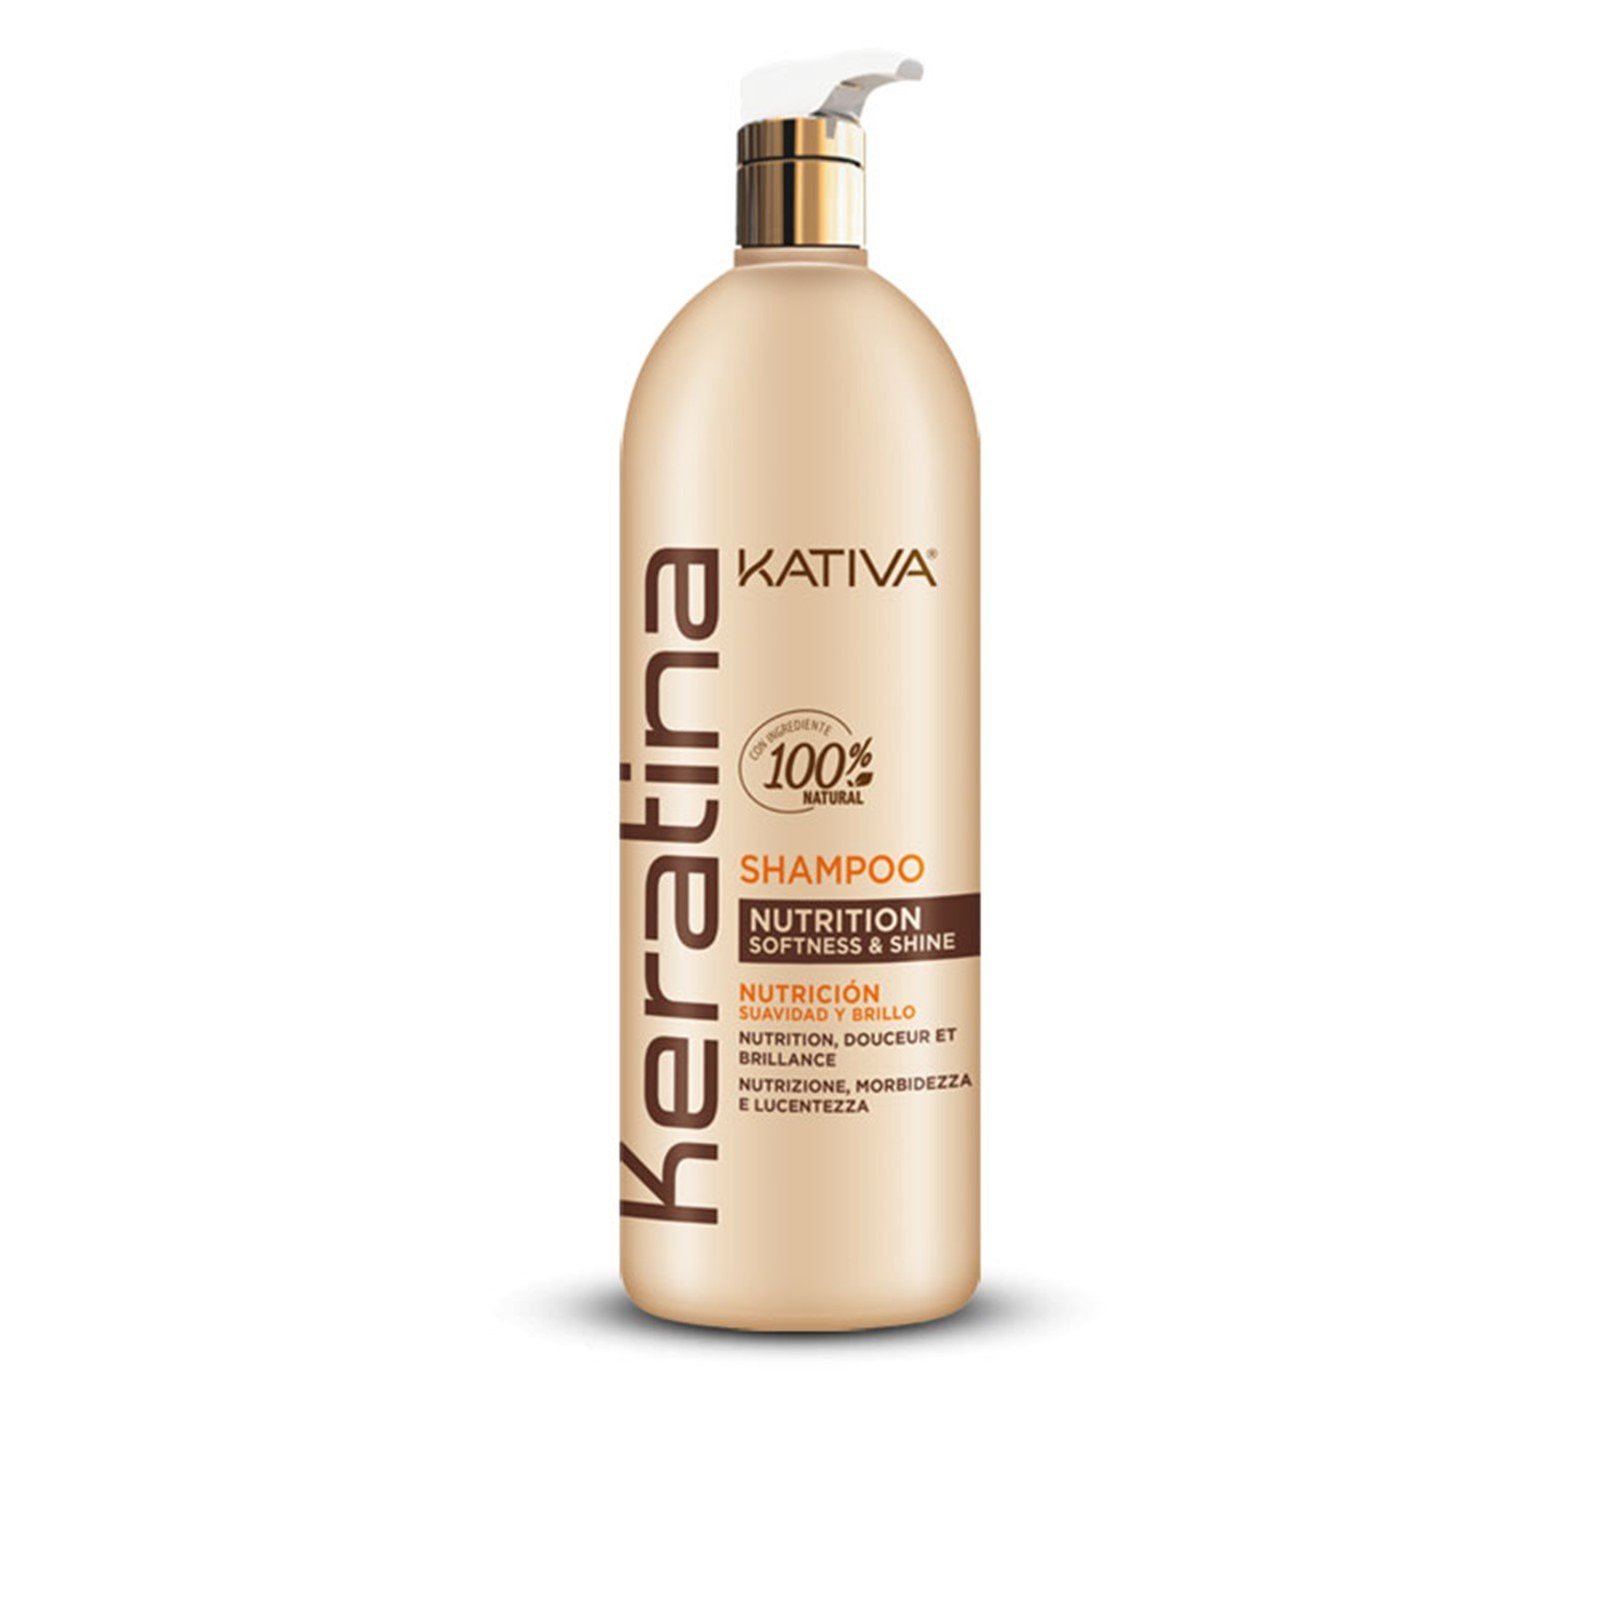 Kativa Keratin Nutrition Softness & Shine Shampoo 1L (33.8 fl oz)